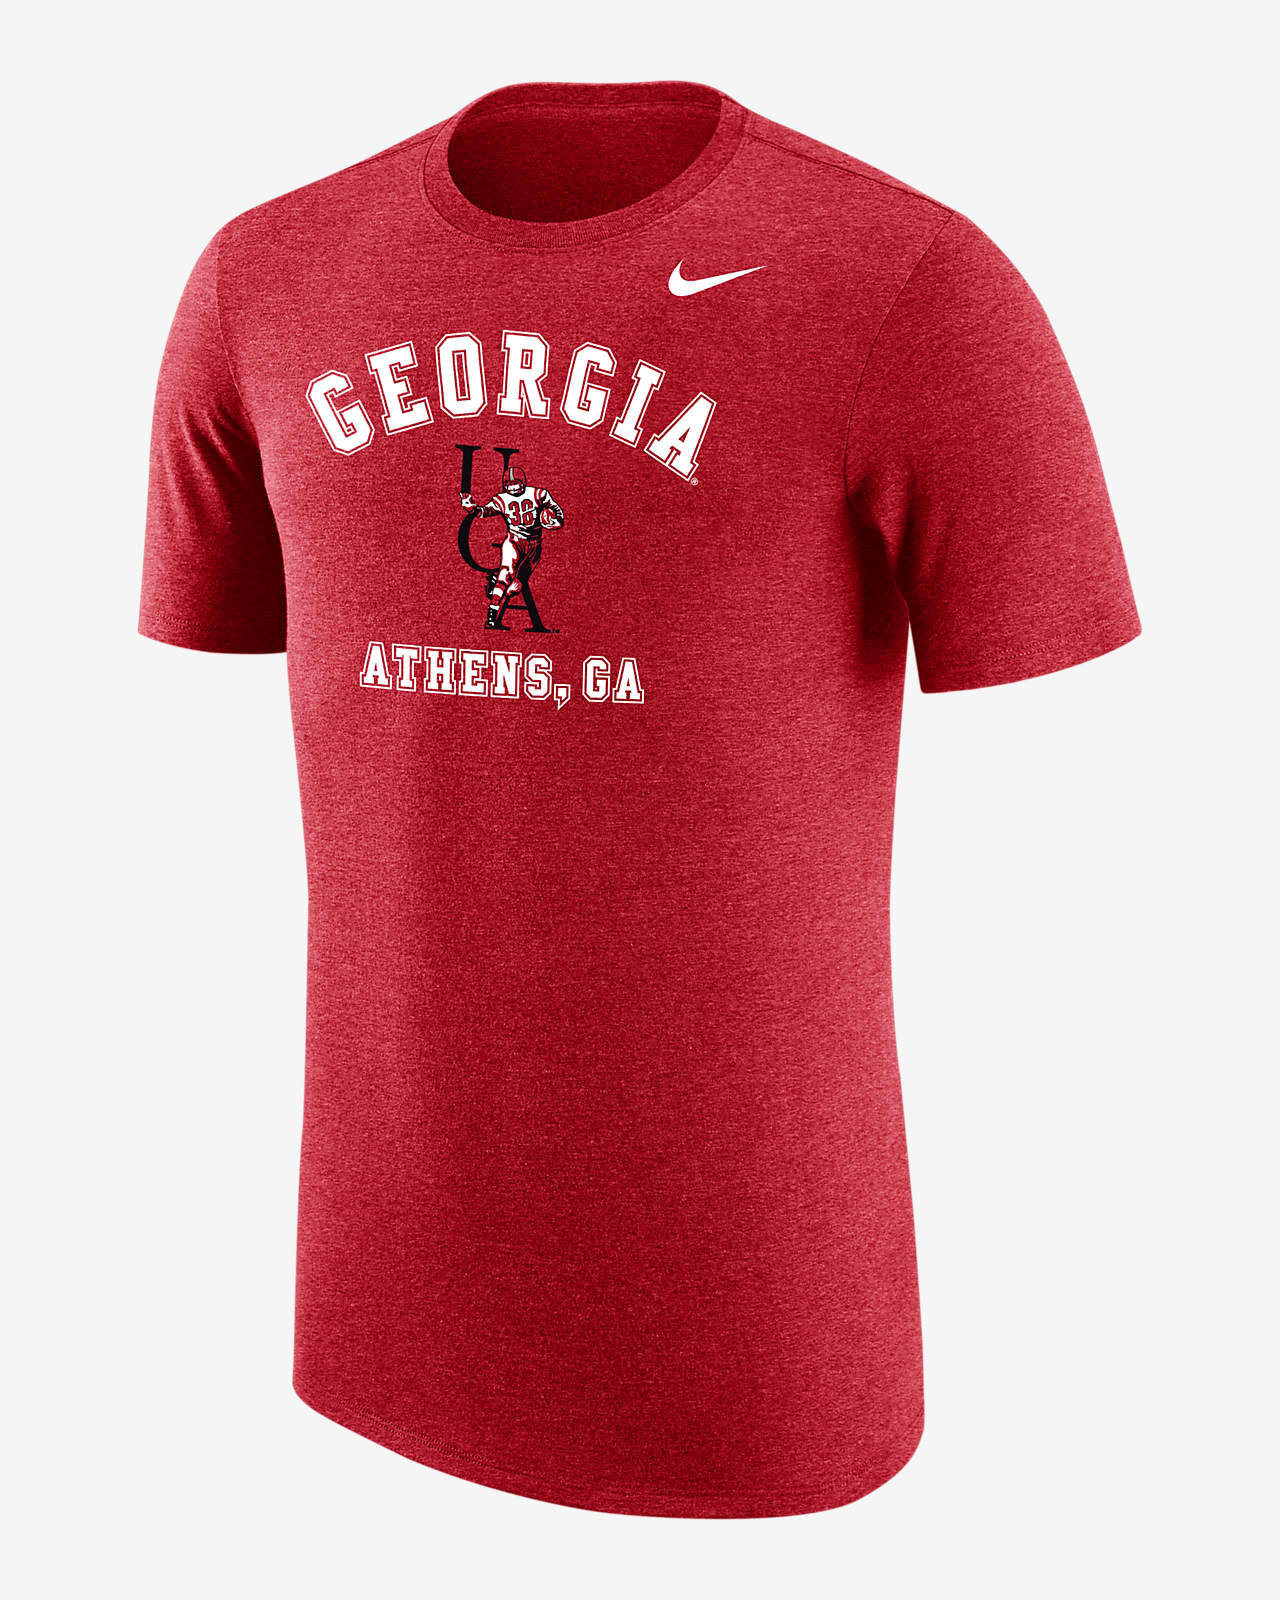 Georgia Men's Nike College T-Shirt